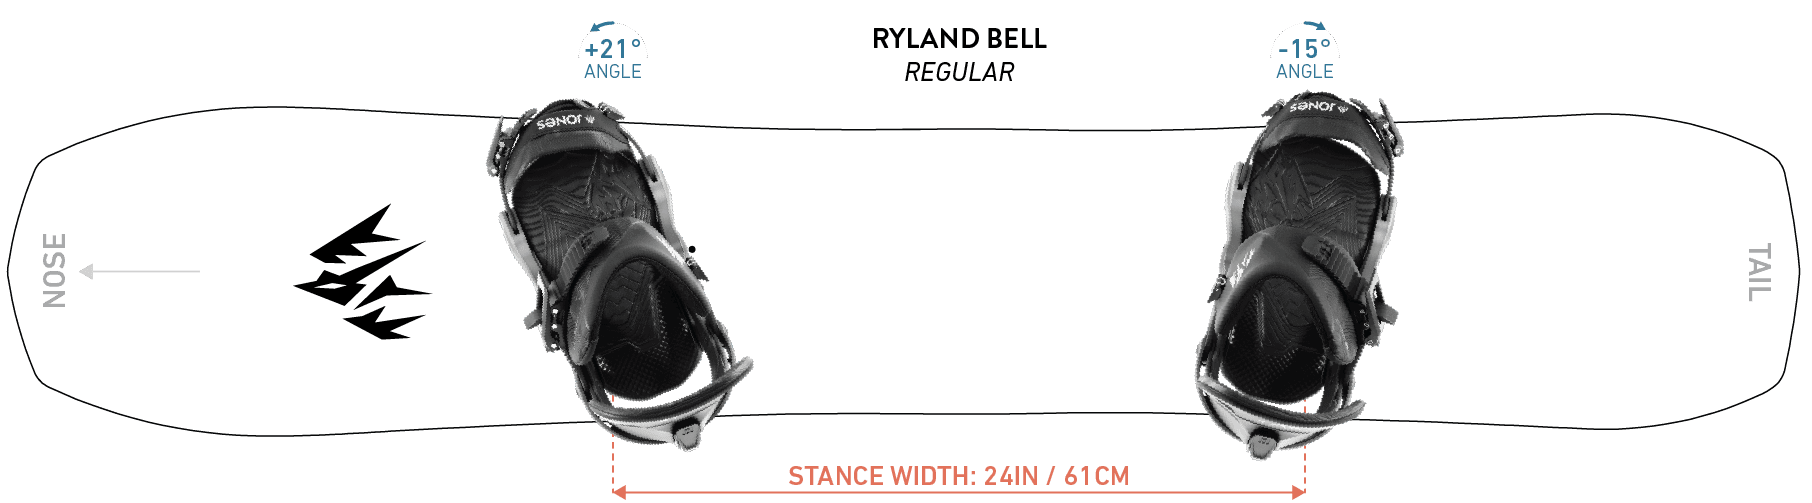 Ryland-Bell-Stance